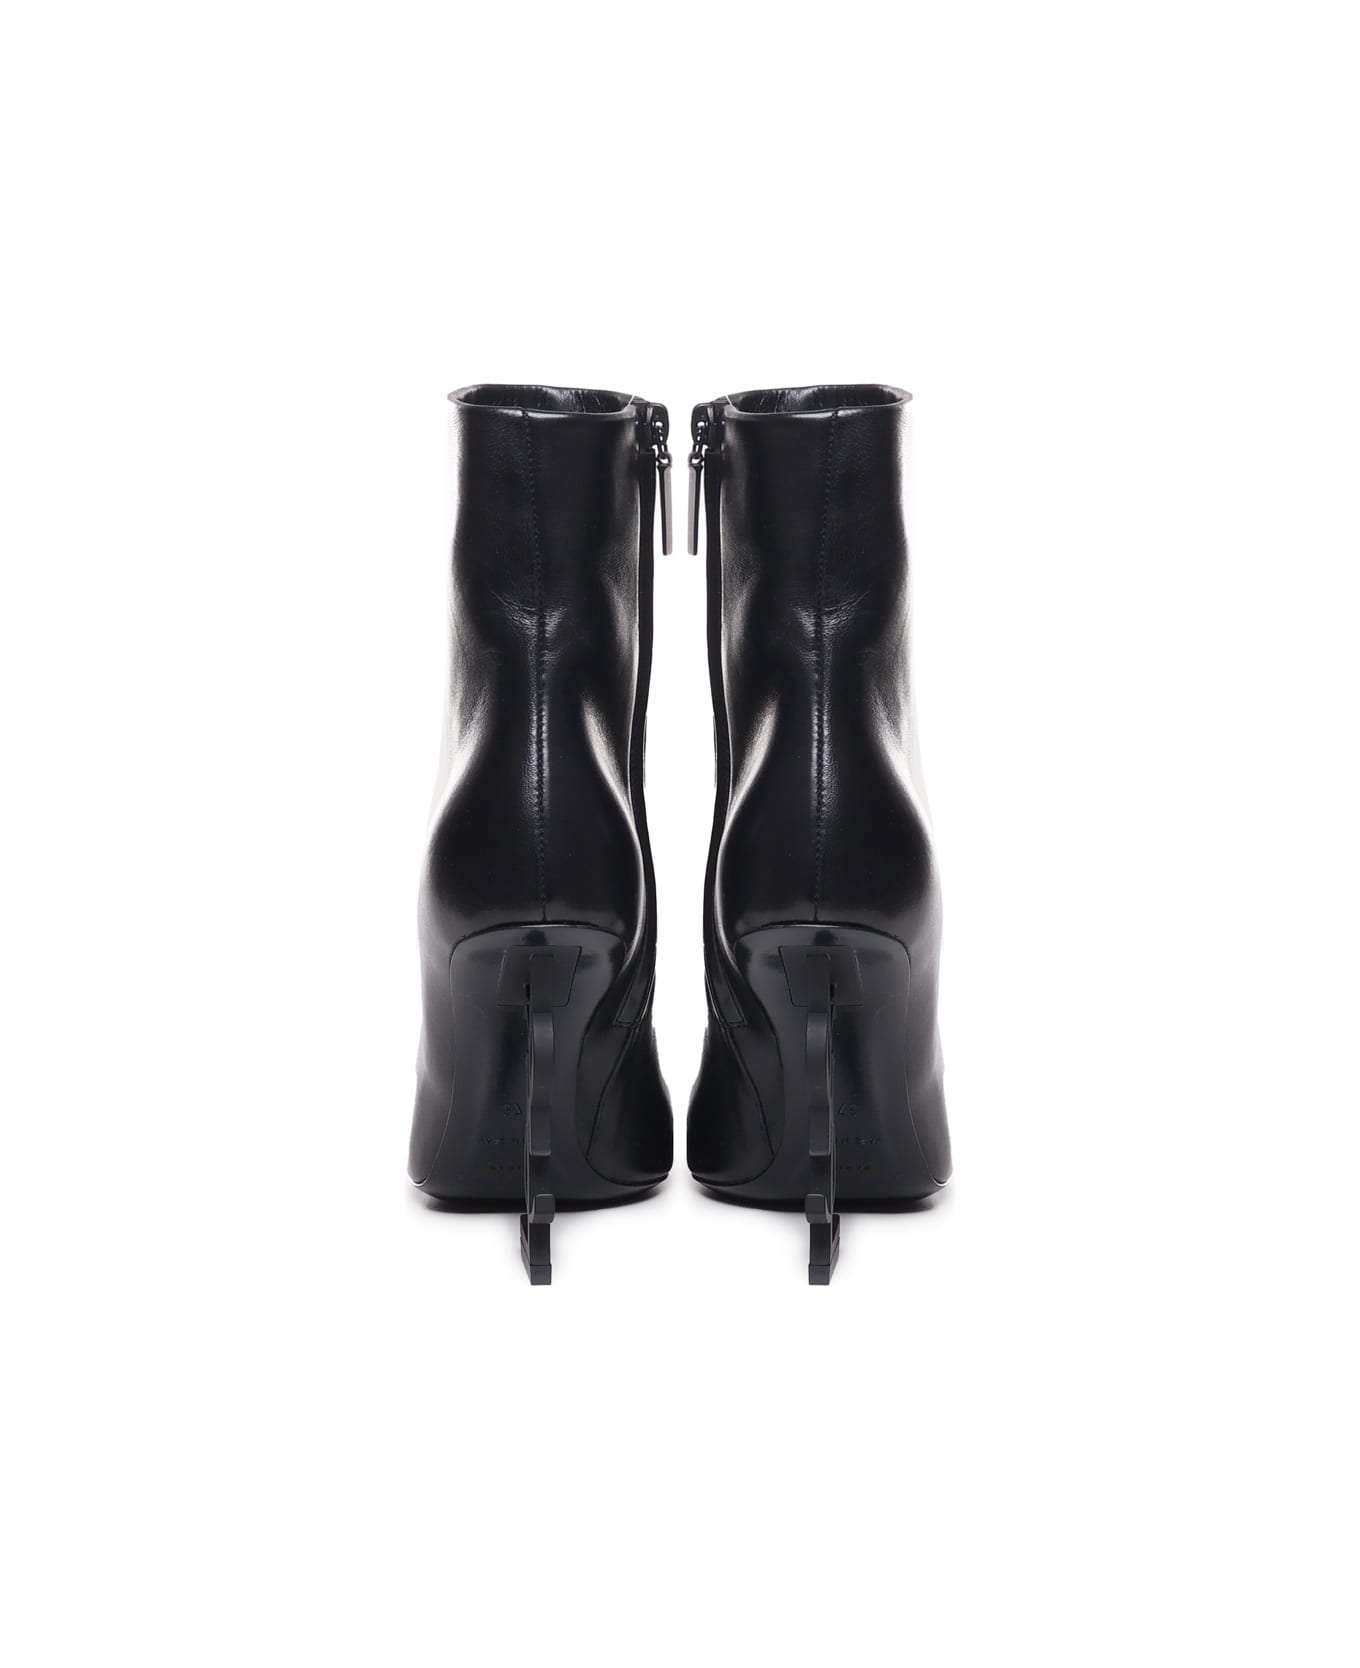 Saint Laurent Opyum Ankle Boots In Calfskin - Black